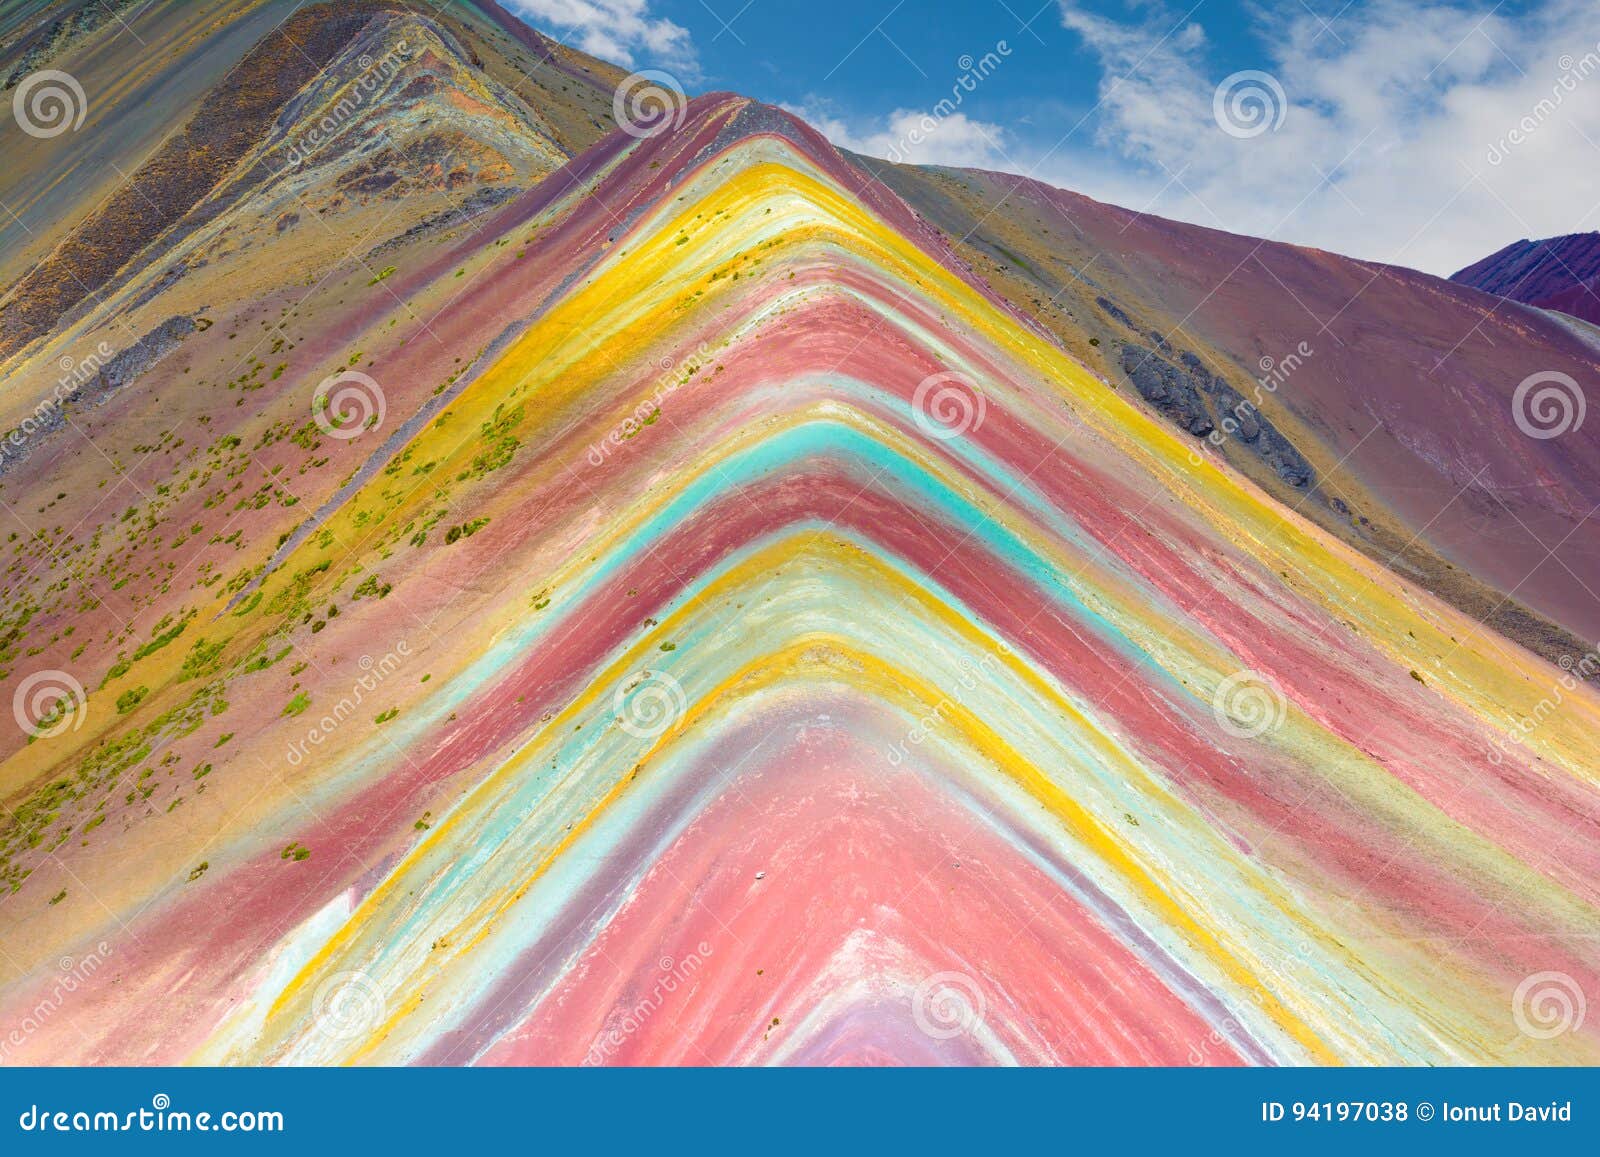 vinicunca or rainbow mountain,pitumarca-peru